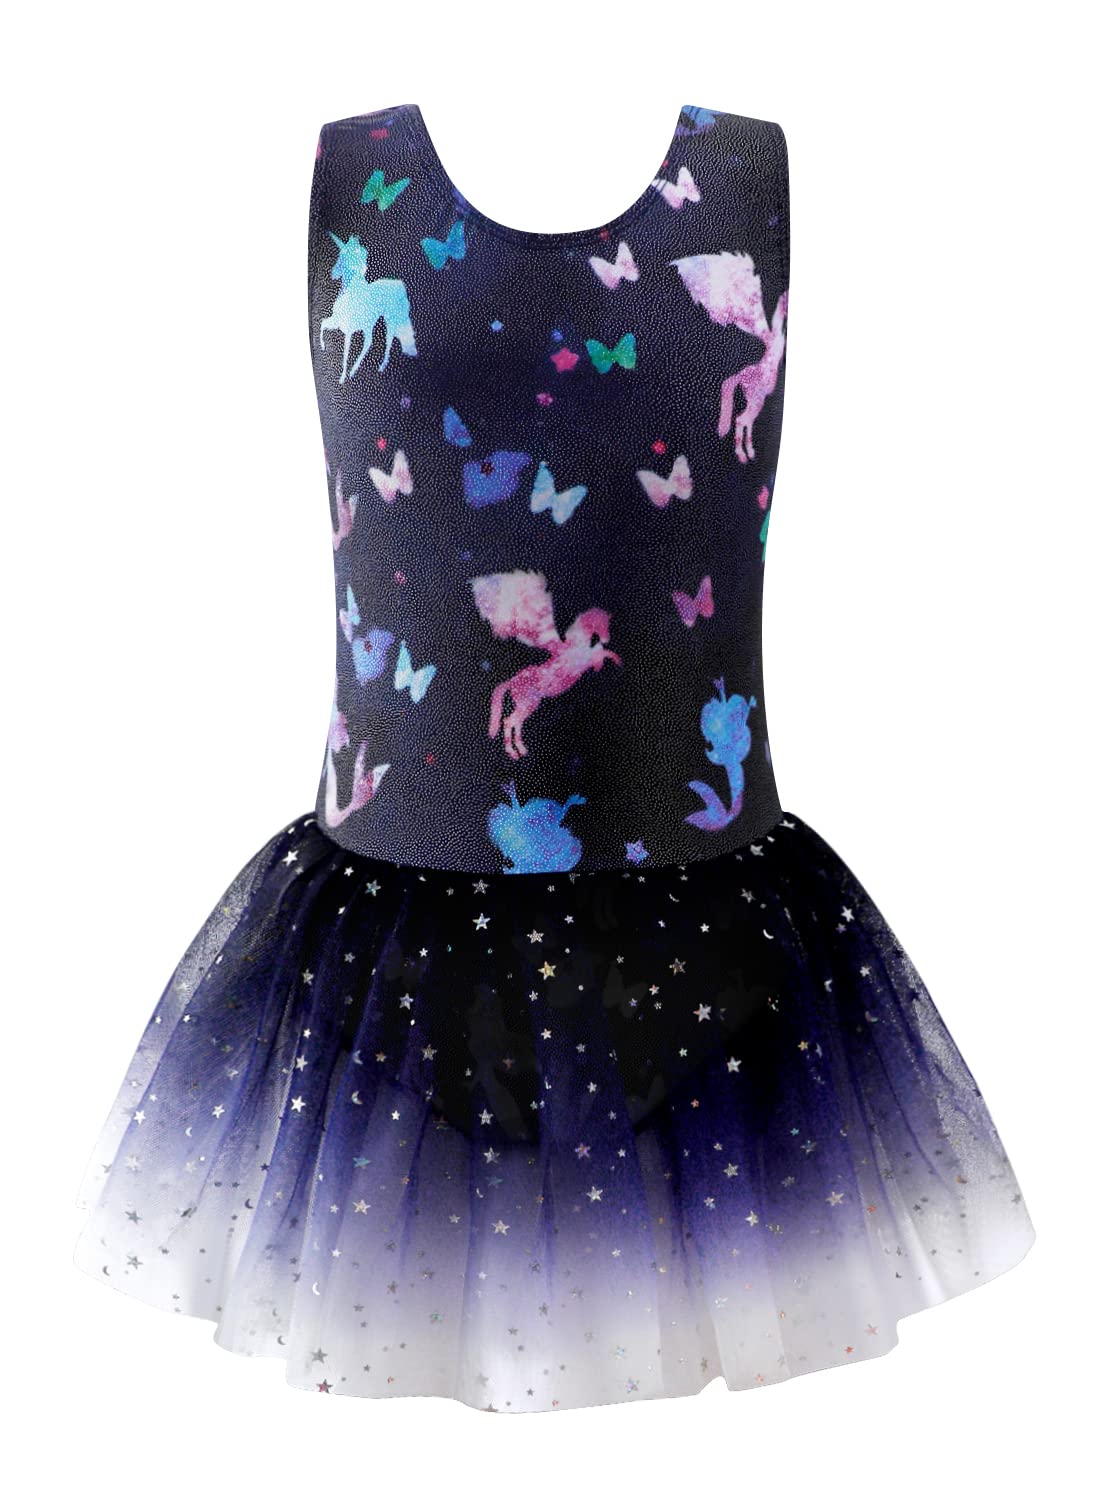 Eqsjiu Gymnastics Leotards For Girls 7-8 Ballet Dance Dress Unicorn Mermaid Butterfly Cosmos Stars Dark Blue